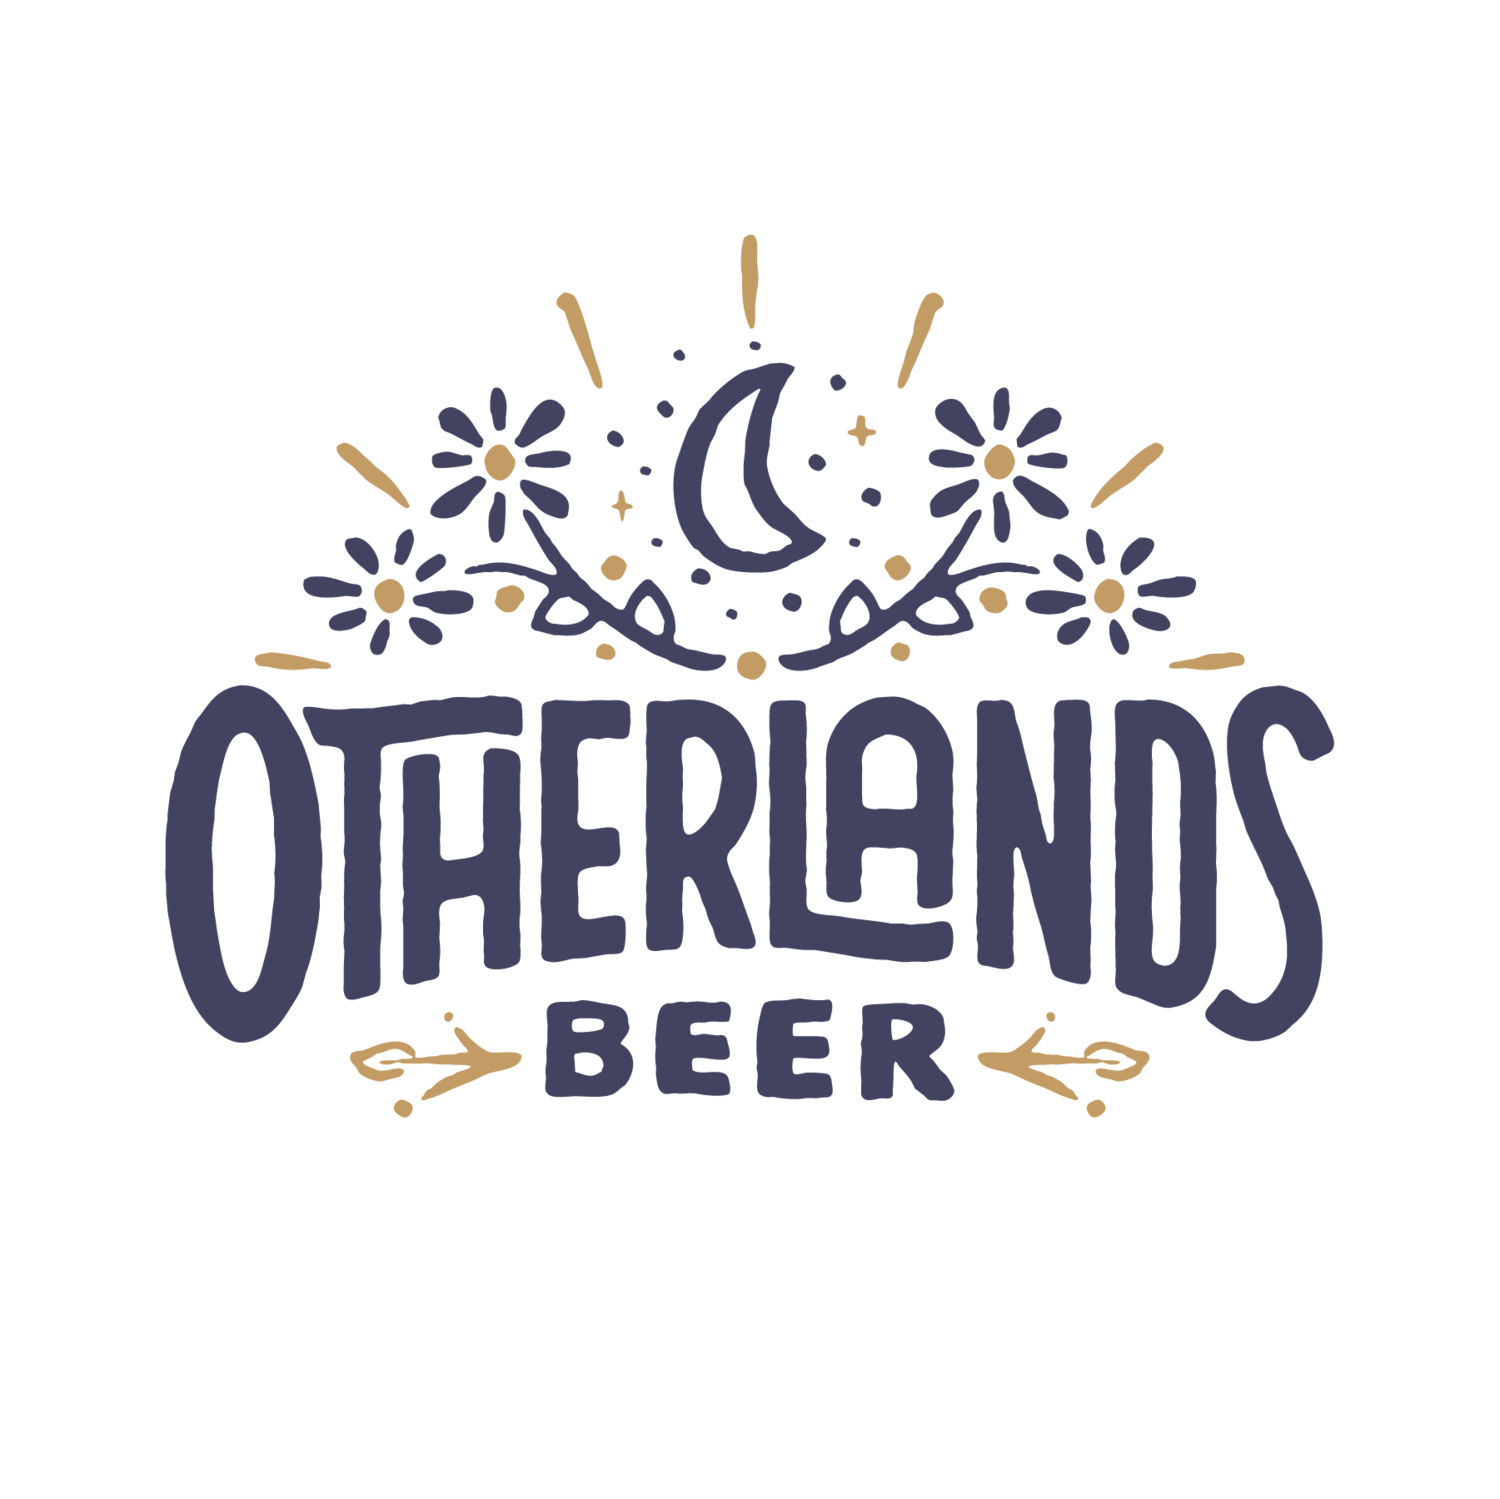 Otherlands beer